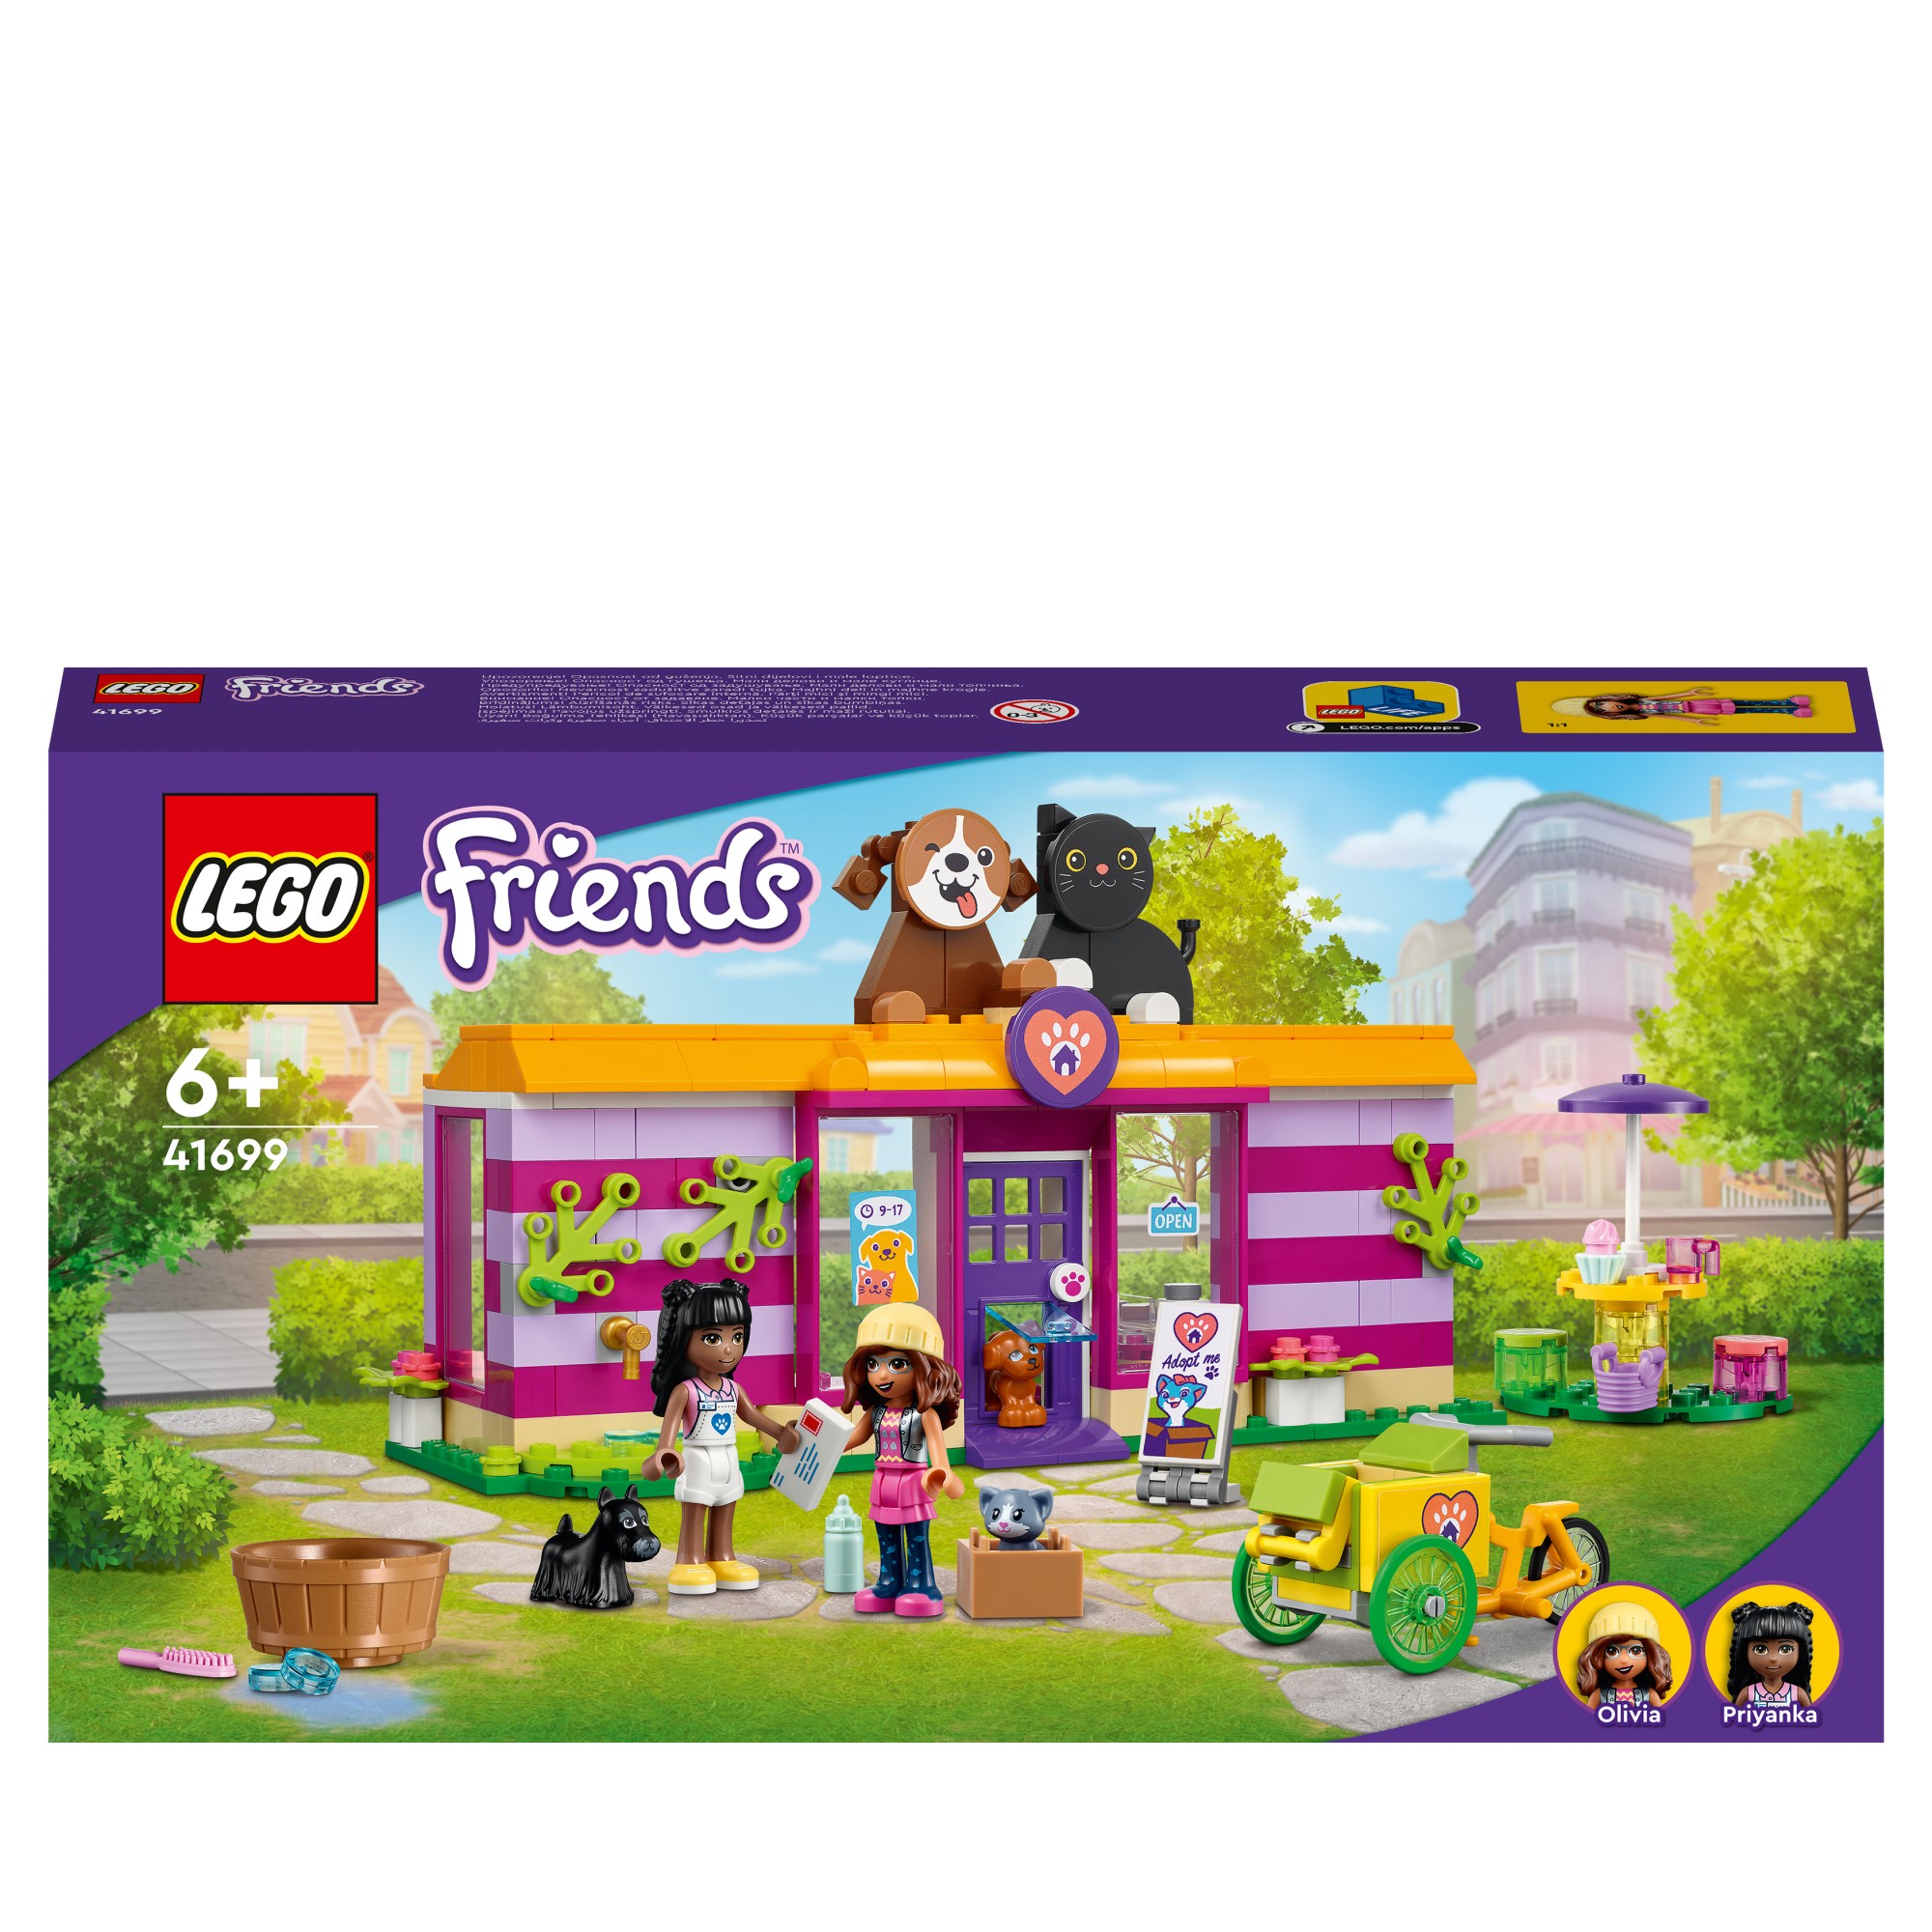 LEGO 41699 Friends Pet Adoption Café Animal Set at Toys R Us UK